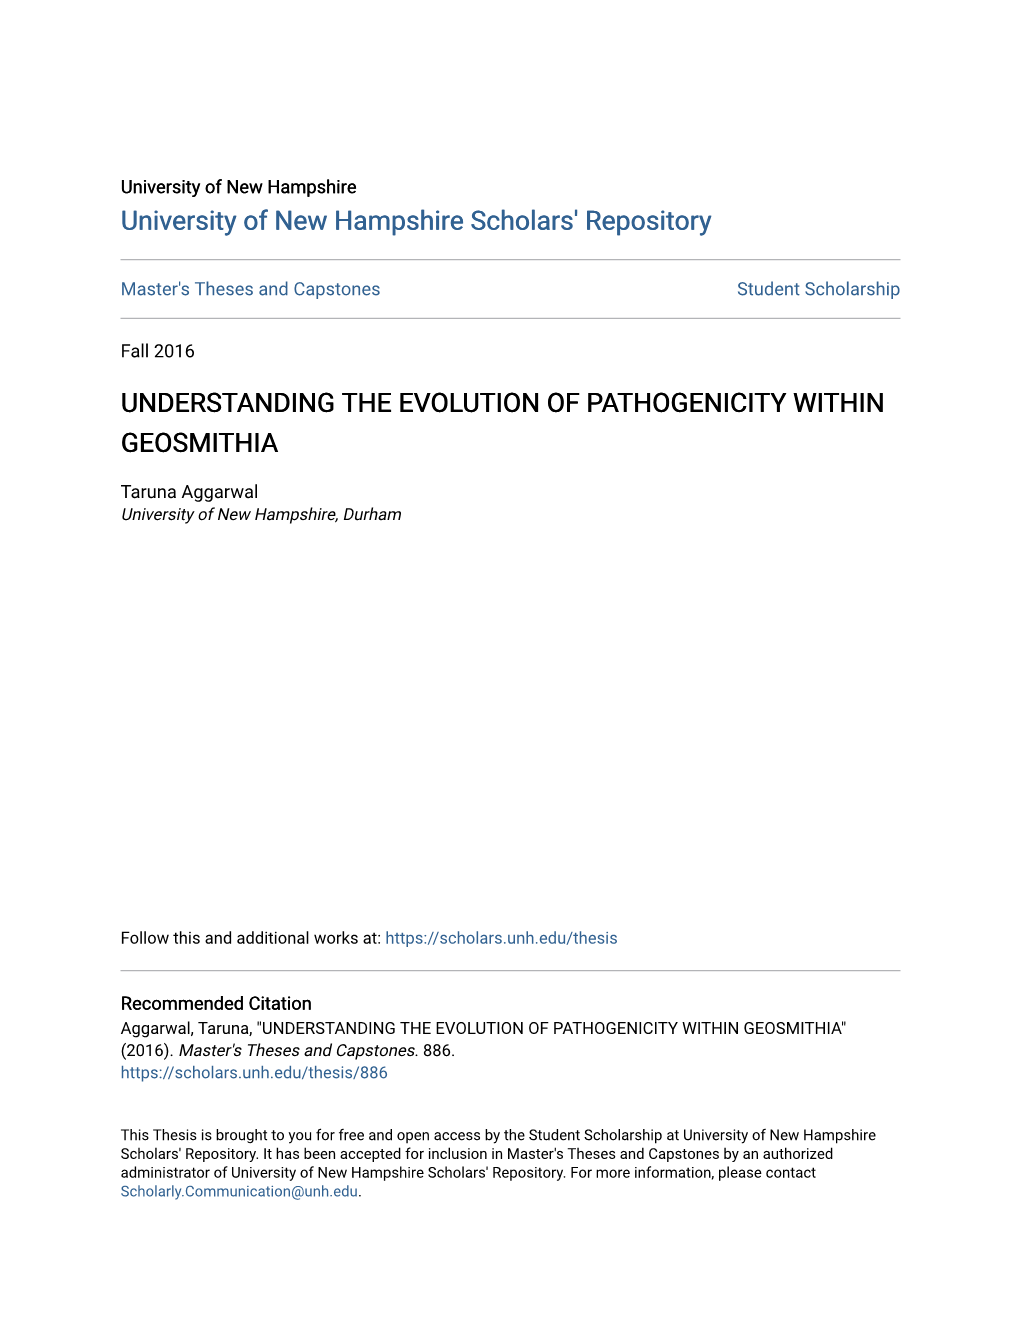 Understanding the Evolution of Pathogenicity Within Geosmithia